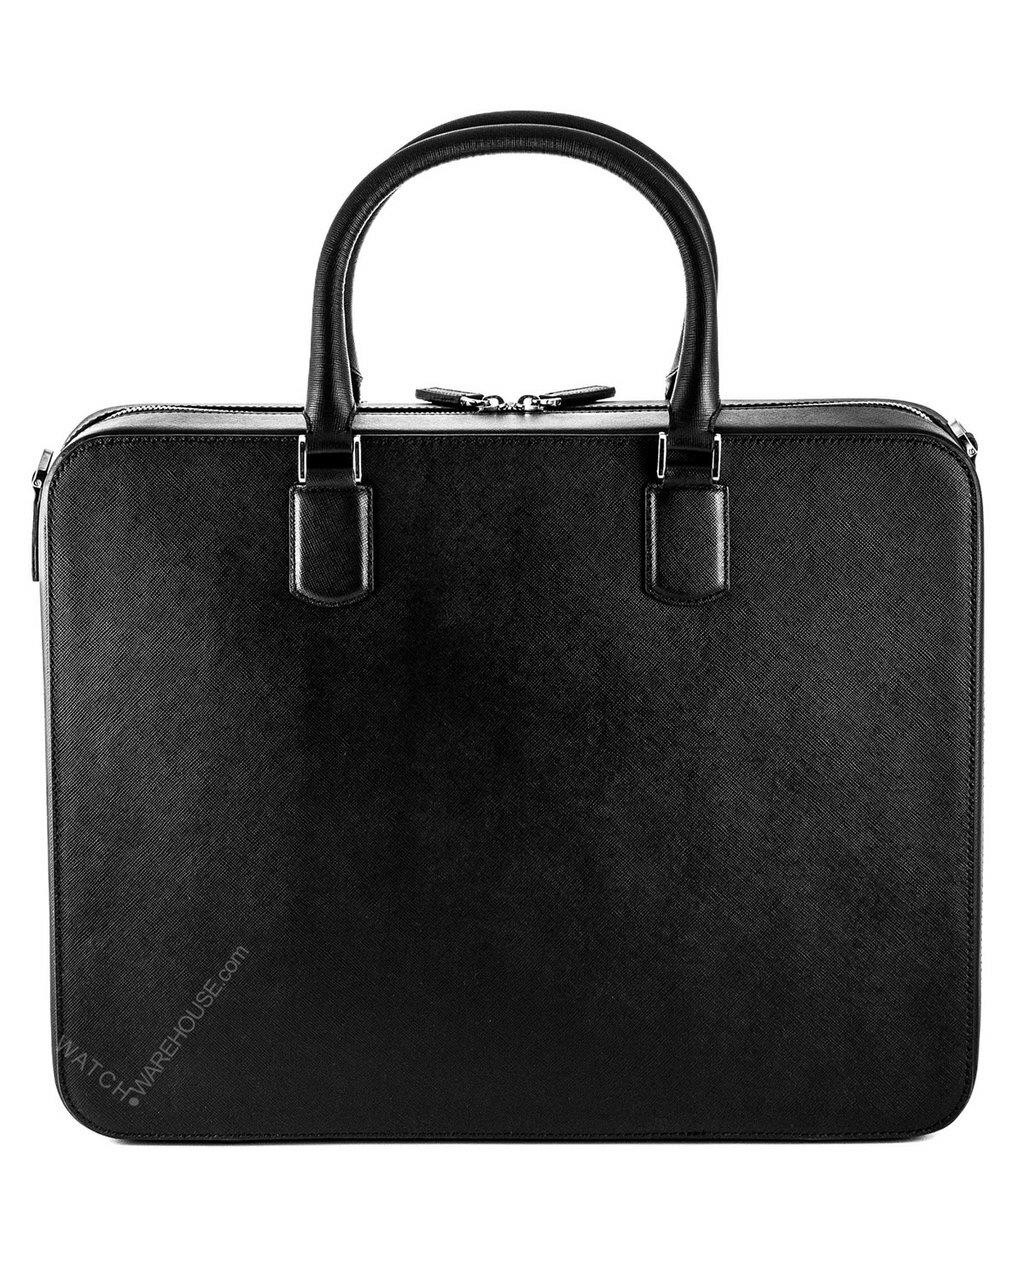 PRADA Navy Saffiano Leather Briefcase Laptop Bag